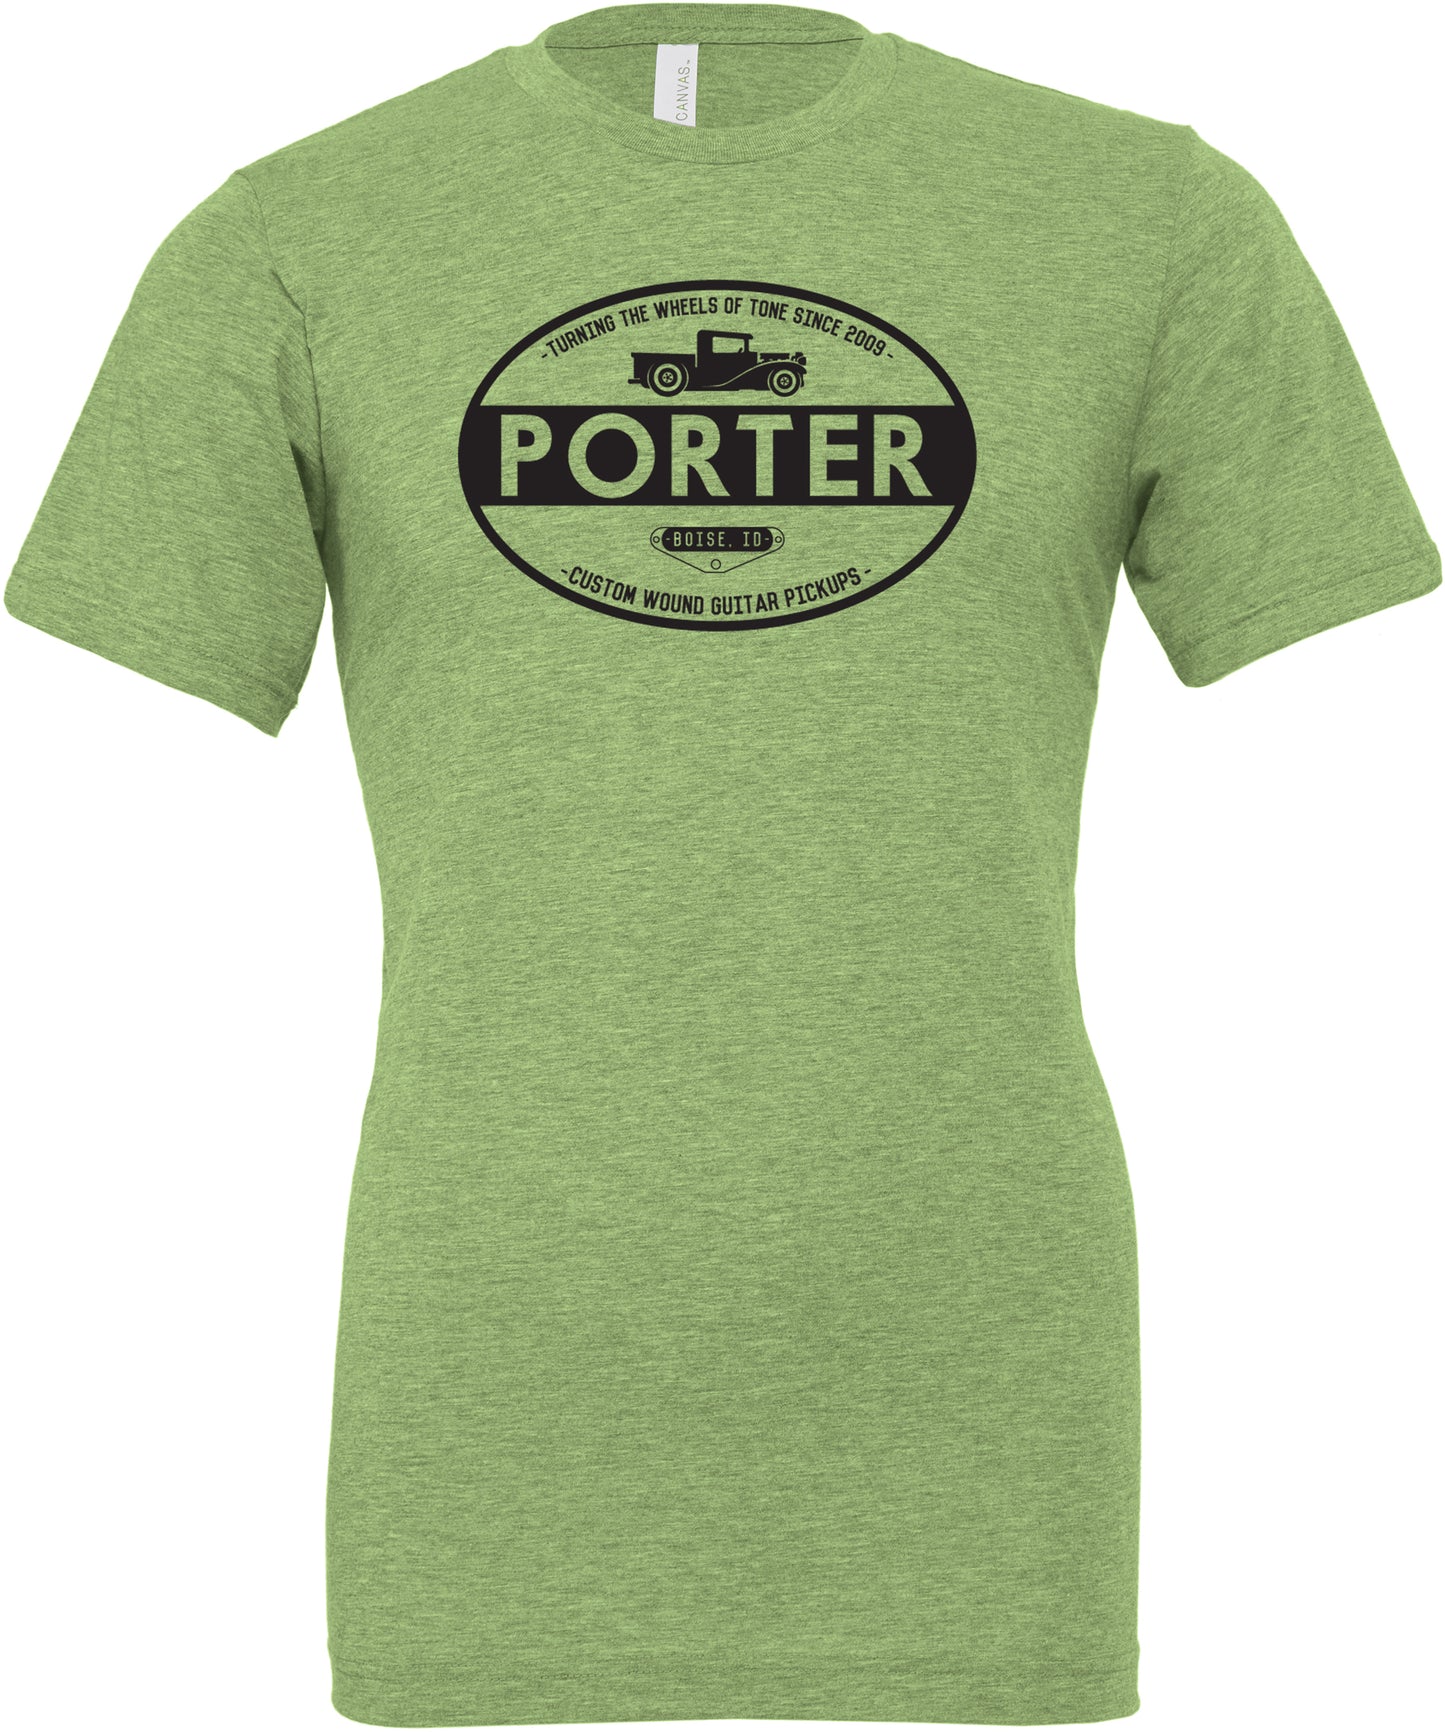 Porter "Pickup Truck" T-Shirt - Heather Green